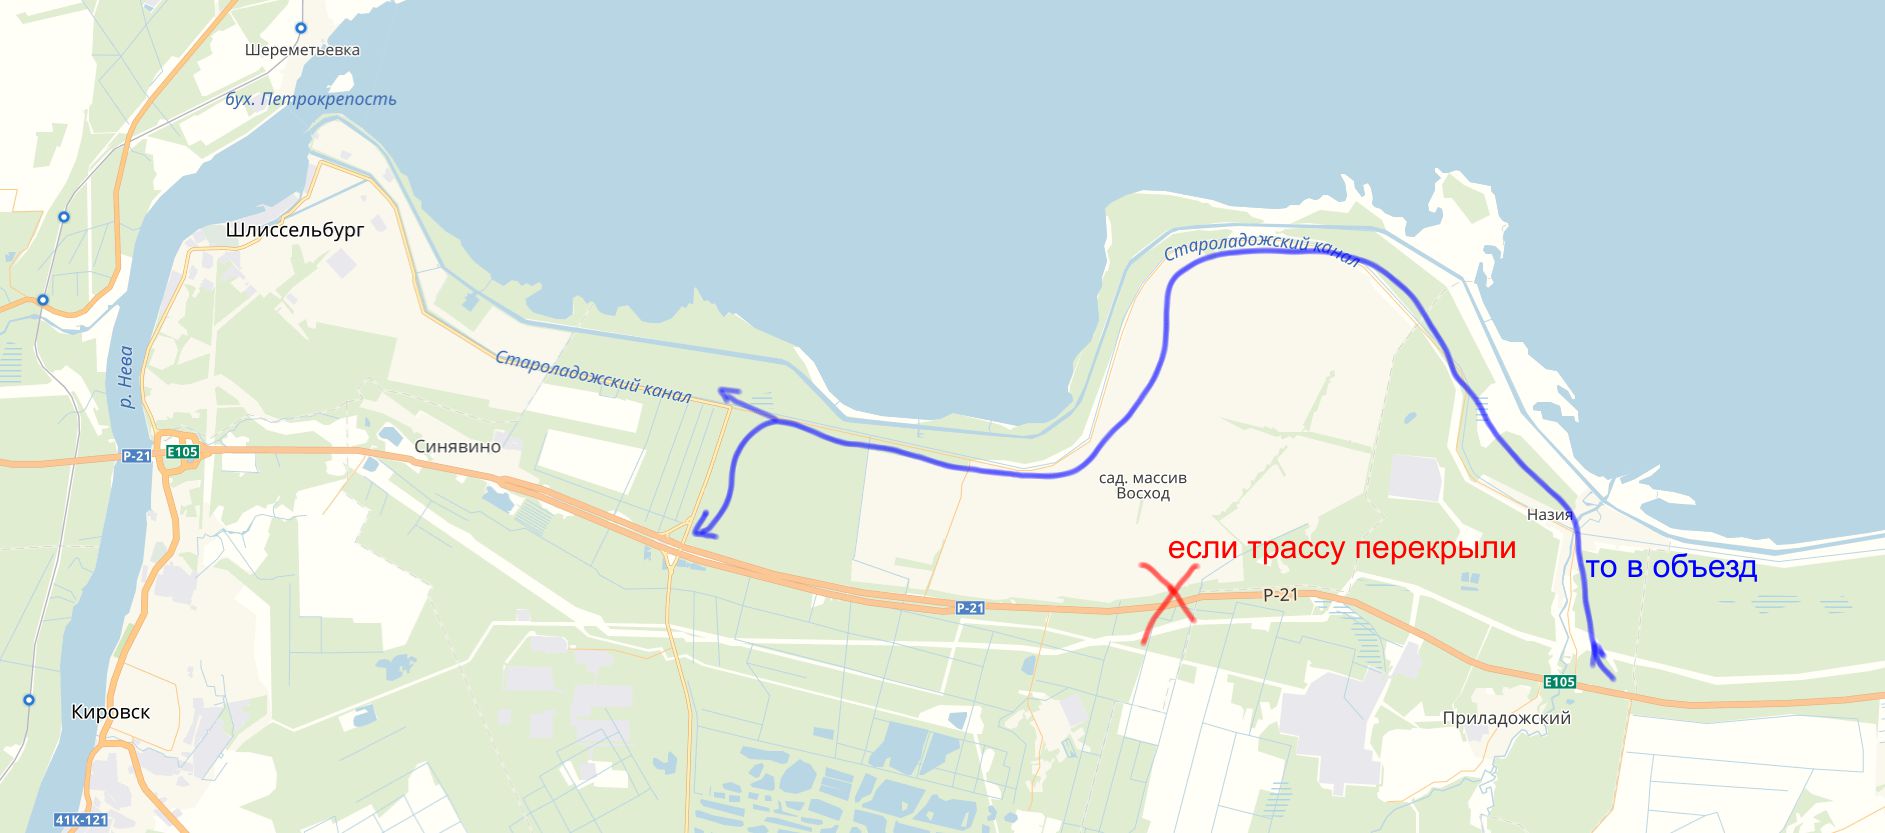 Шлиссельбург на карте ленинградской